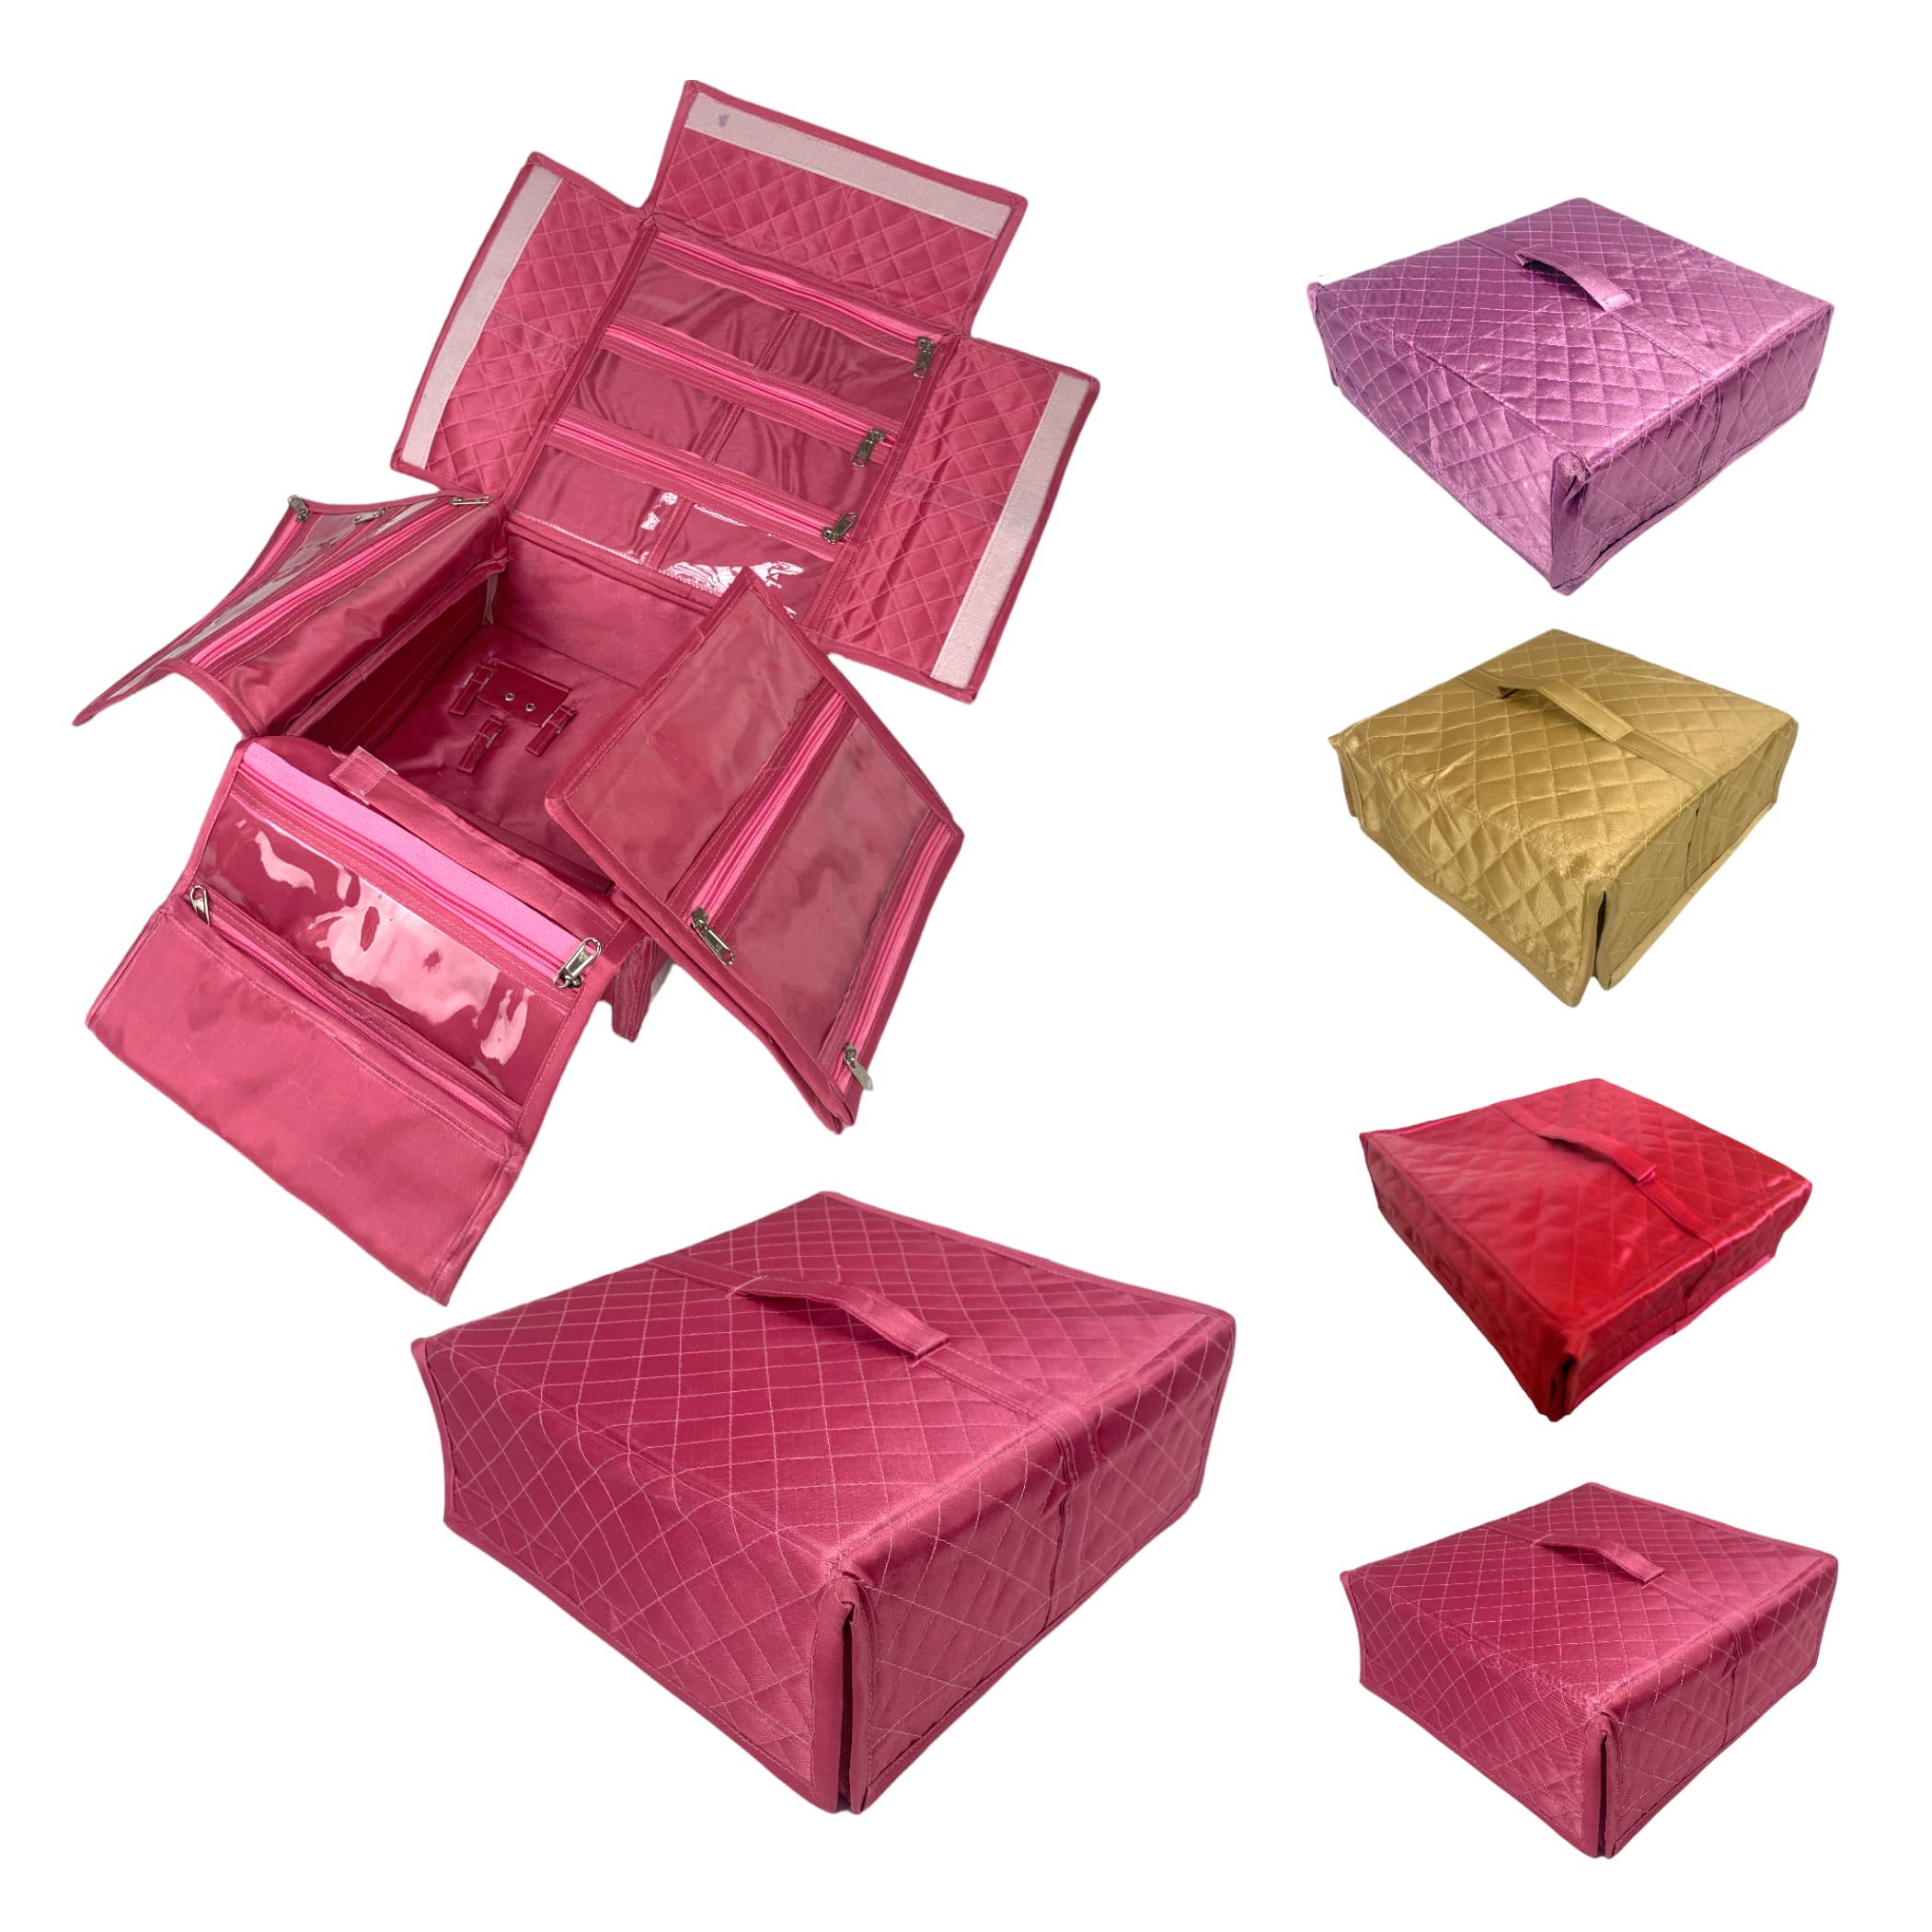 Handmade travel jewelry cloth bag kit organizer case box